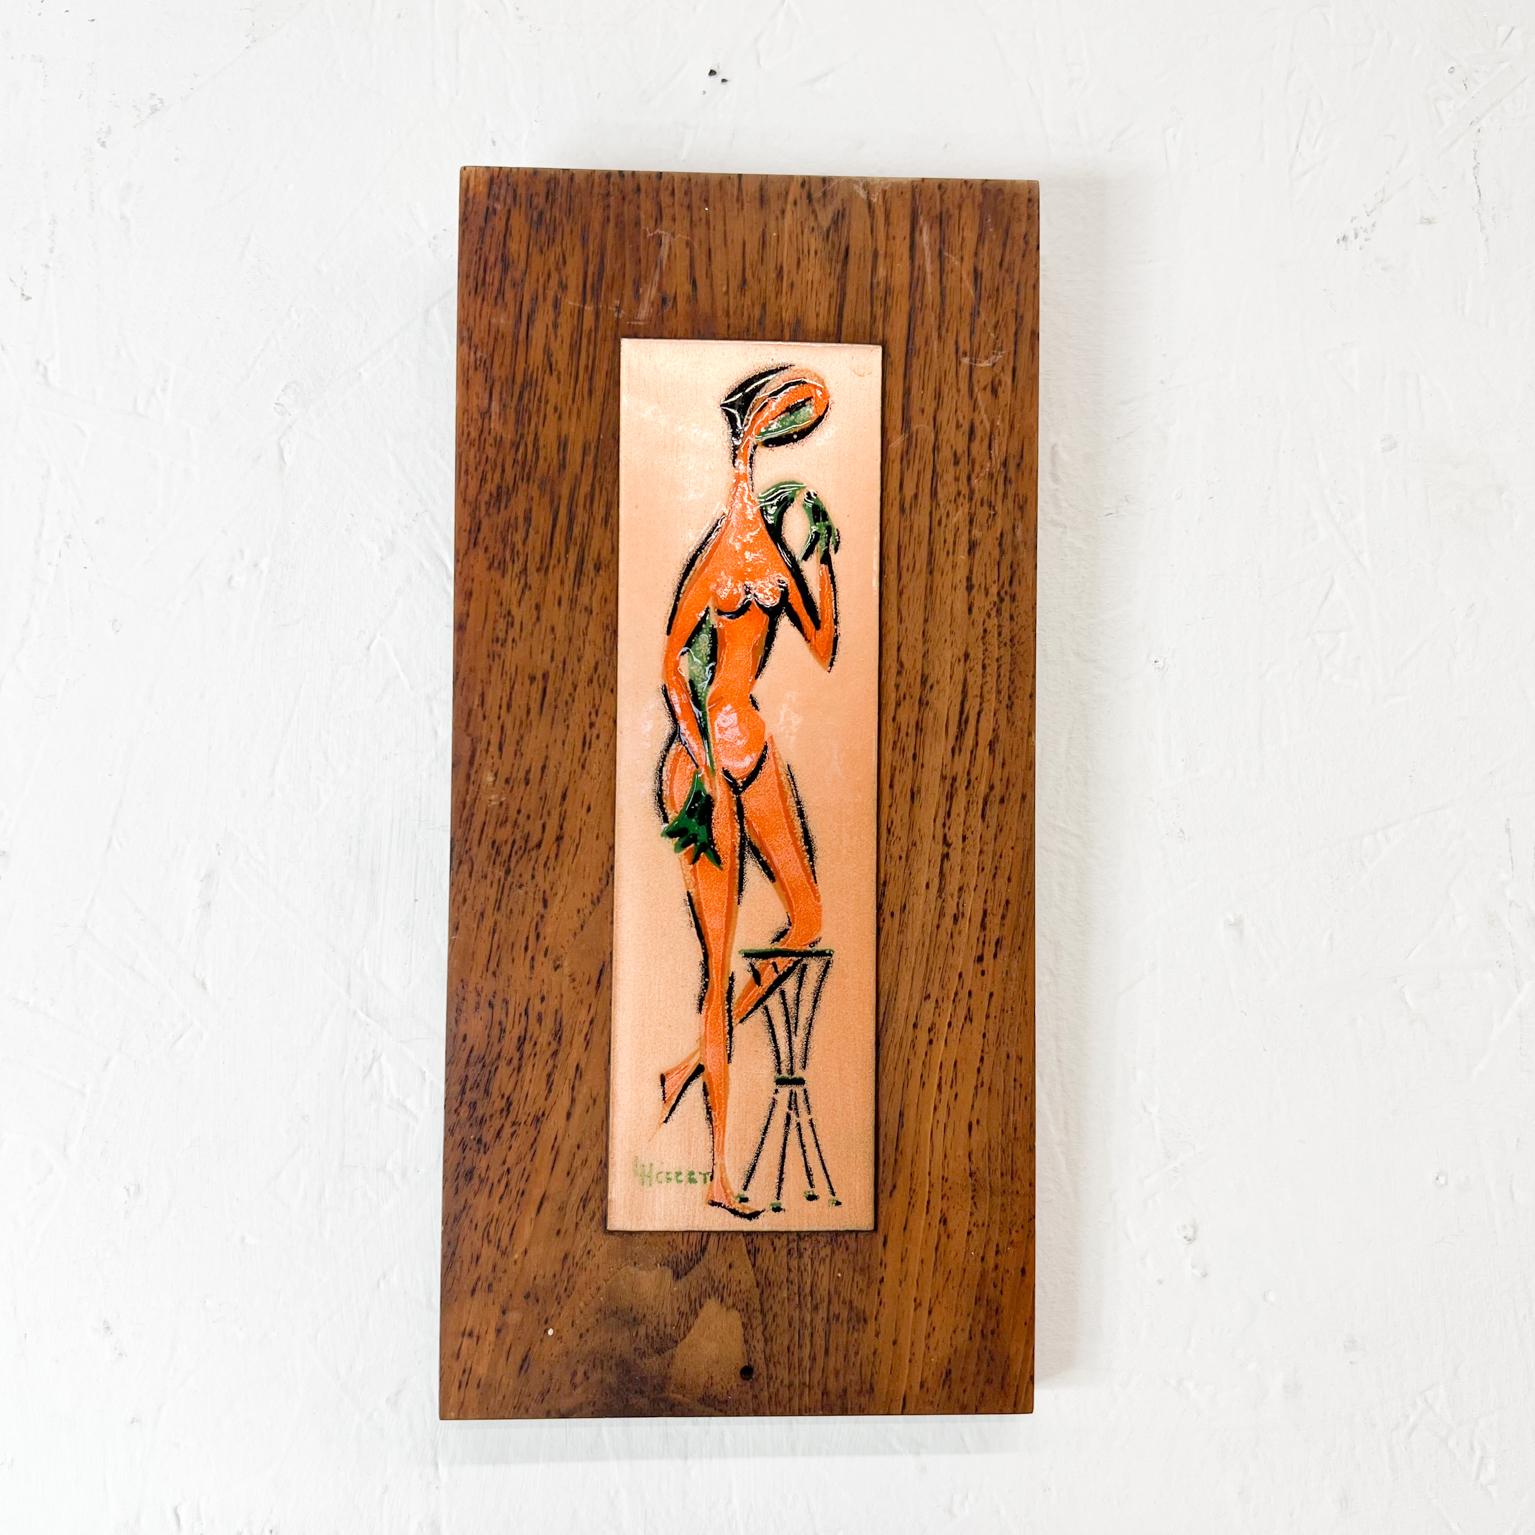 1970s Modernist vintage enamel art female nude on walnut wood.
Signed artwork signature appears as: L H Cecet
Measures: 5.63 wide x 14 tall x .75
Original unrestored vintage condition.
Refer to images.